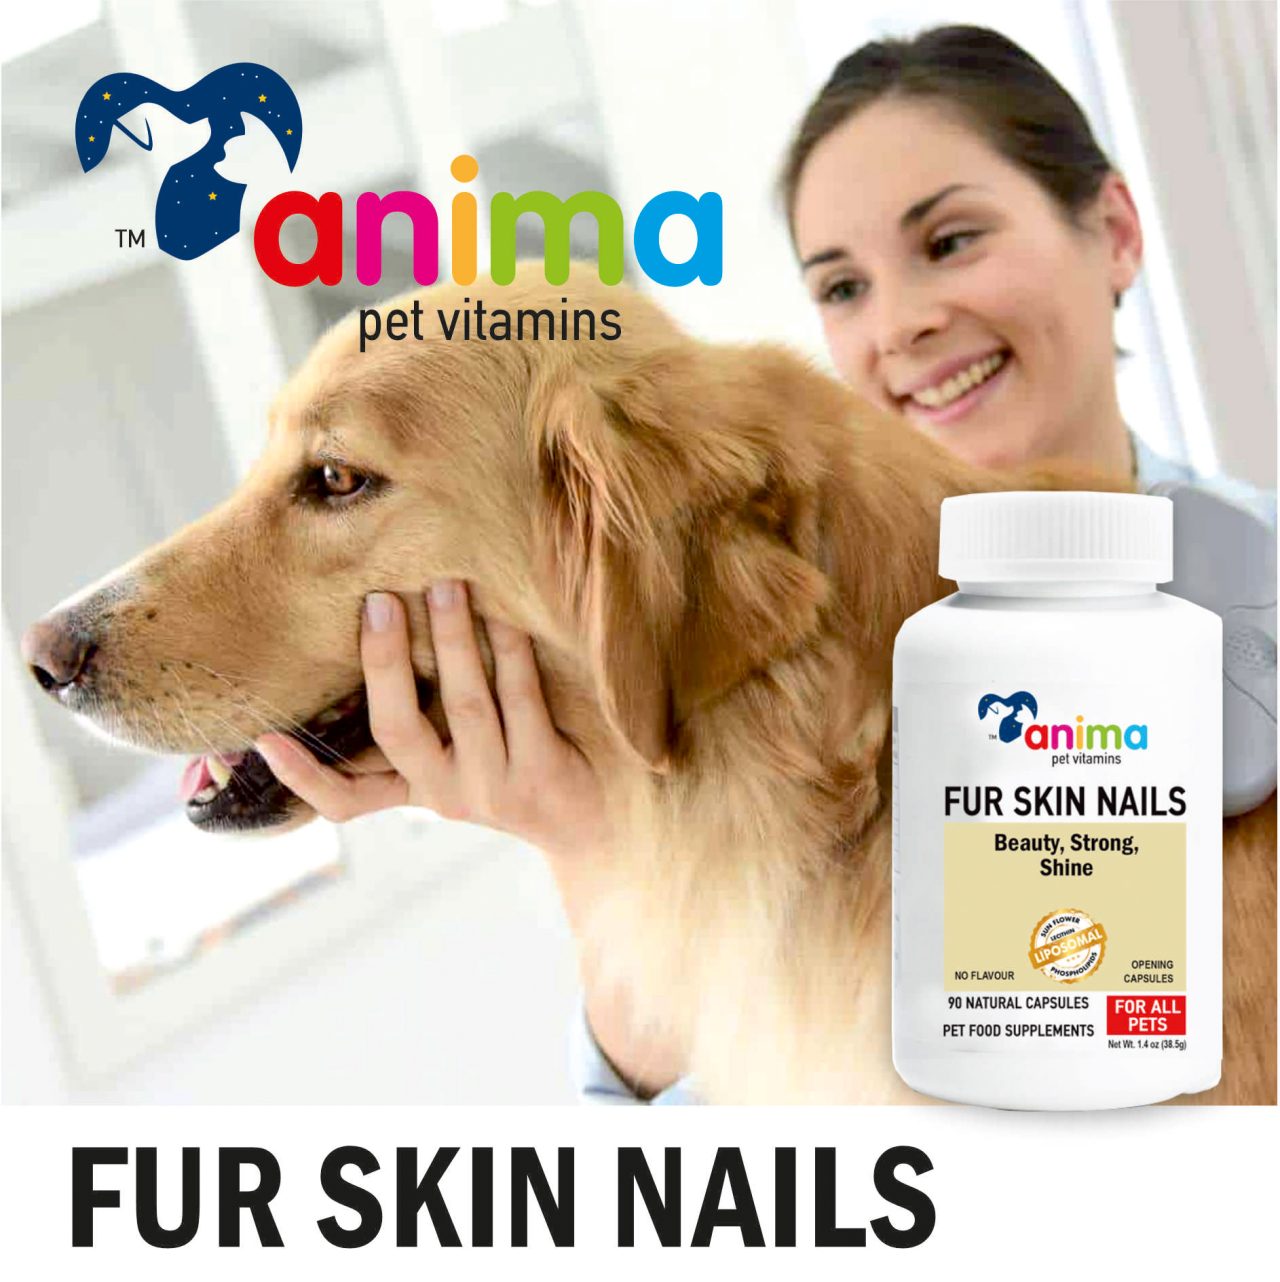 fur skin nails_Anima - ANTIOXIDANT 380mg / 90 CAPS ANTΙ AGING.DETOX.CELL STRESS - Παραγωγη προϊόντων ιδιωτικης ετικετας